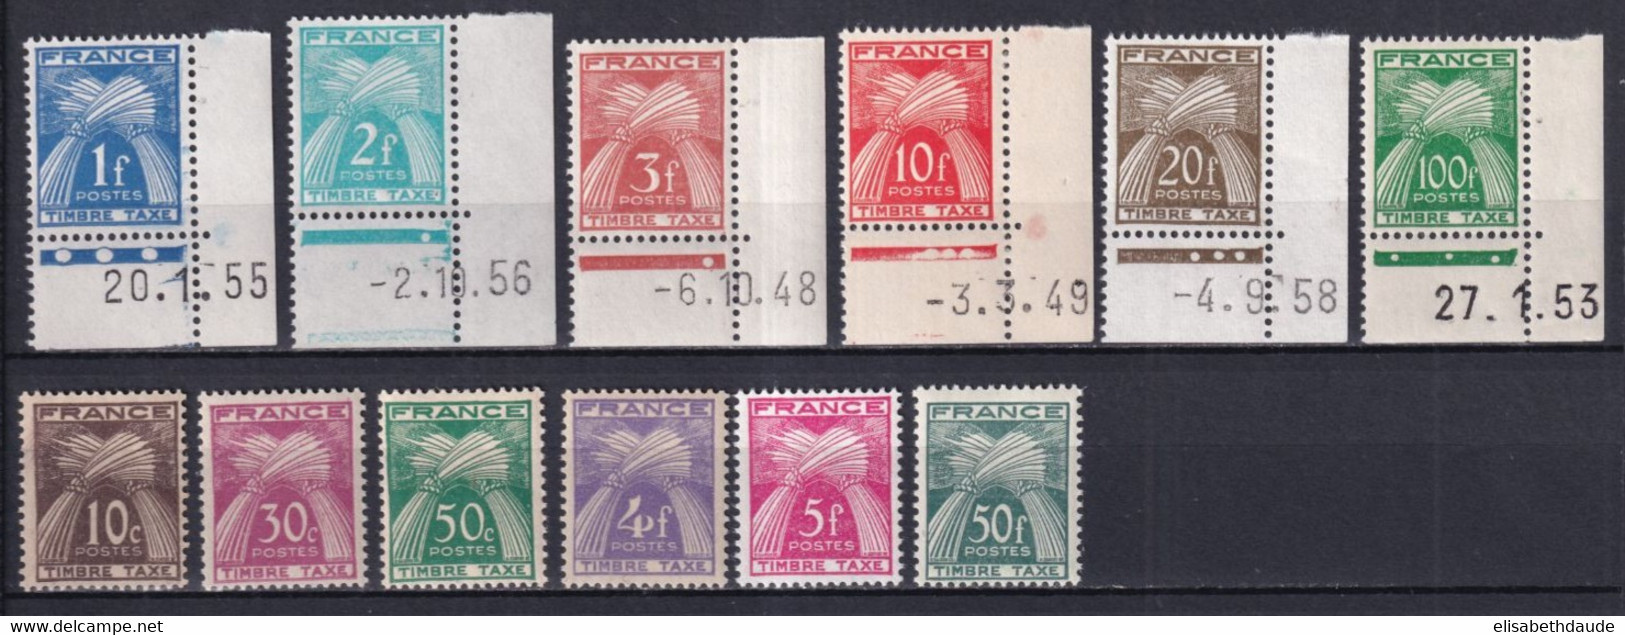 1946/55 - TAXE - YVERT N° 78/89 ** MNH - COTE = 140 EUR. - 1859-1959 Postfris